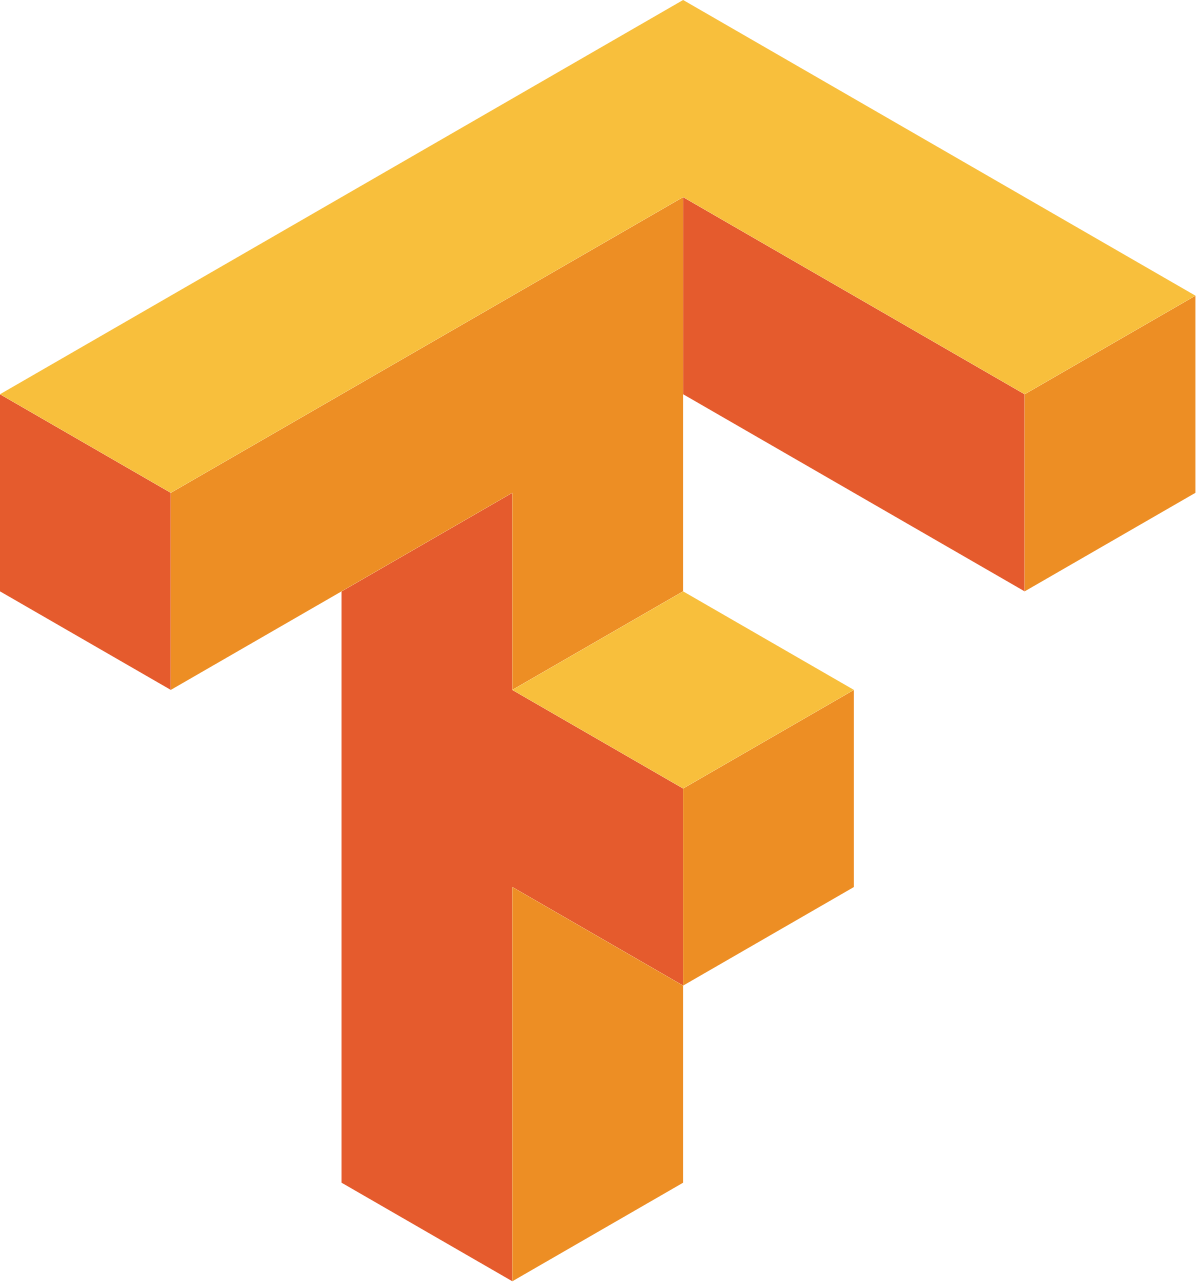 tensorflow-logo